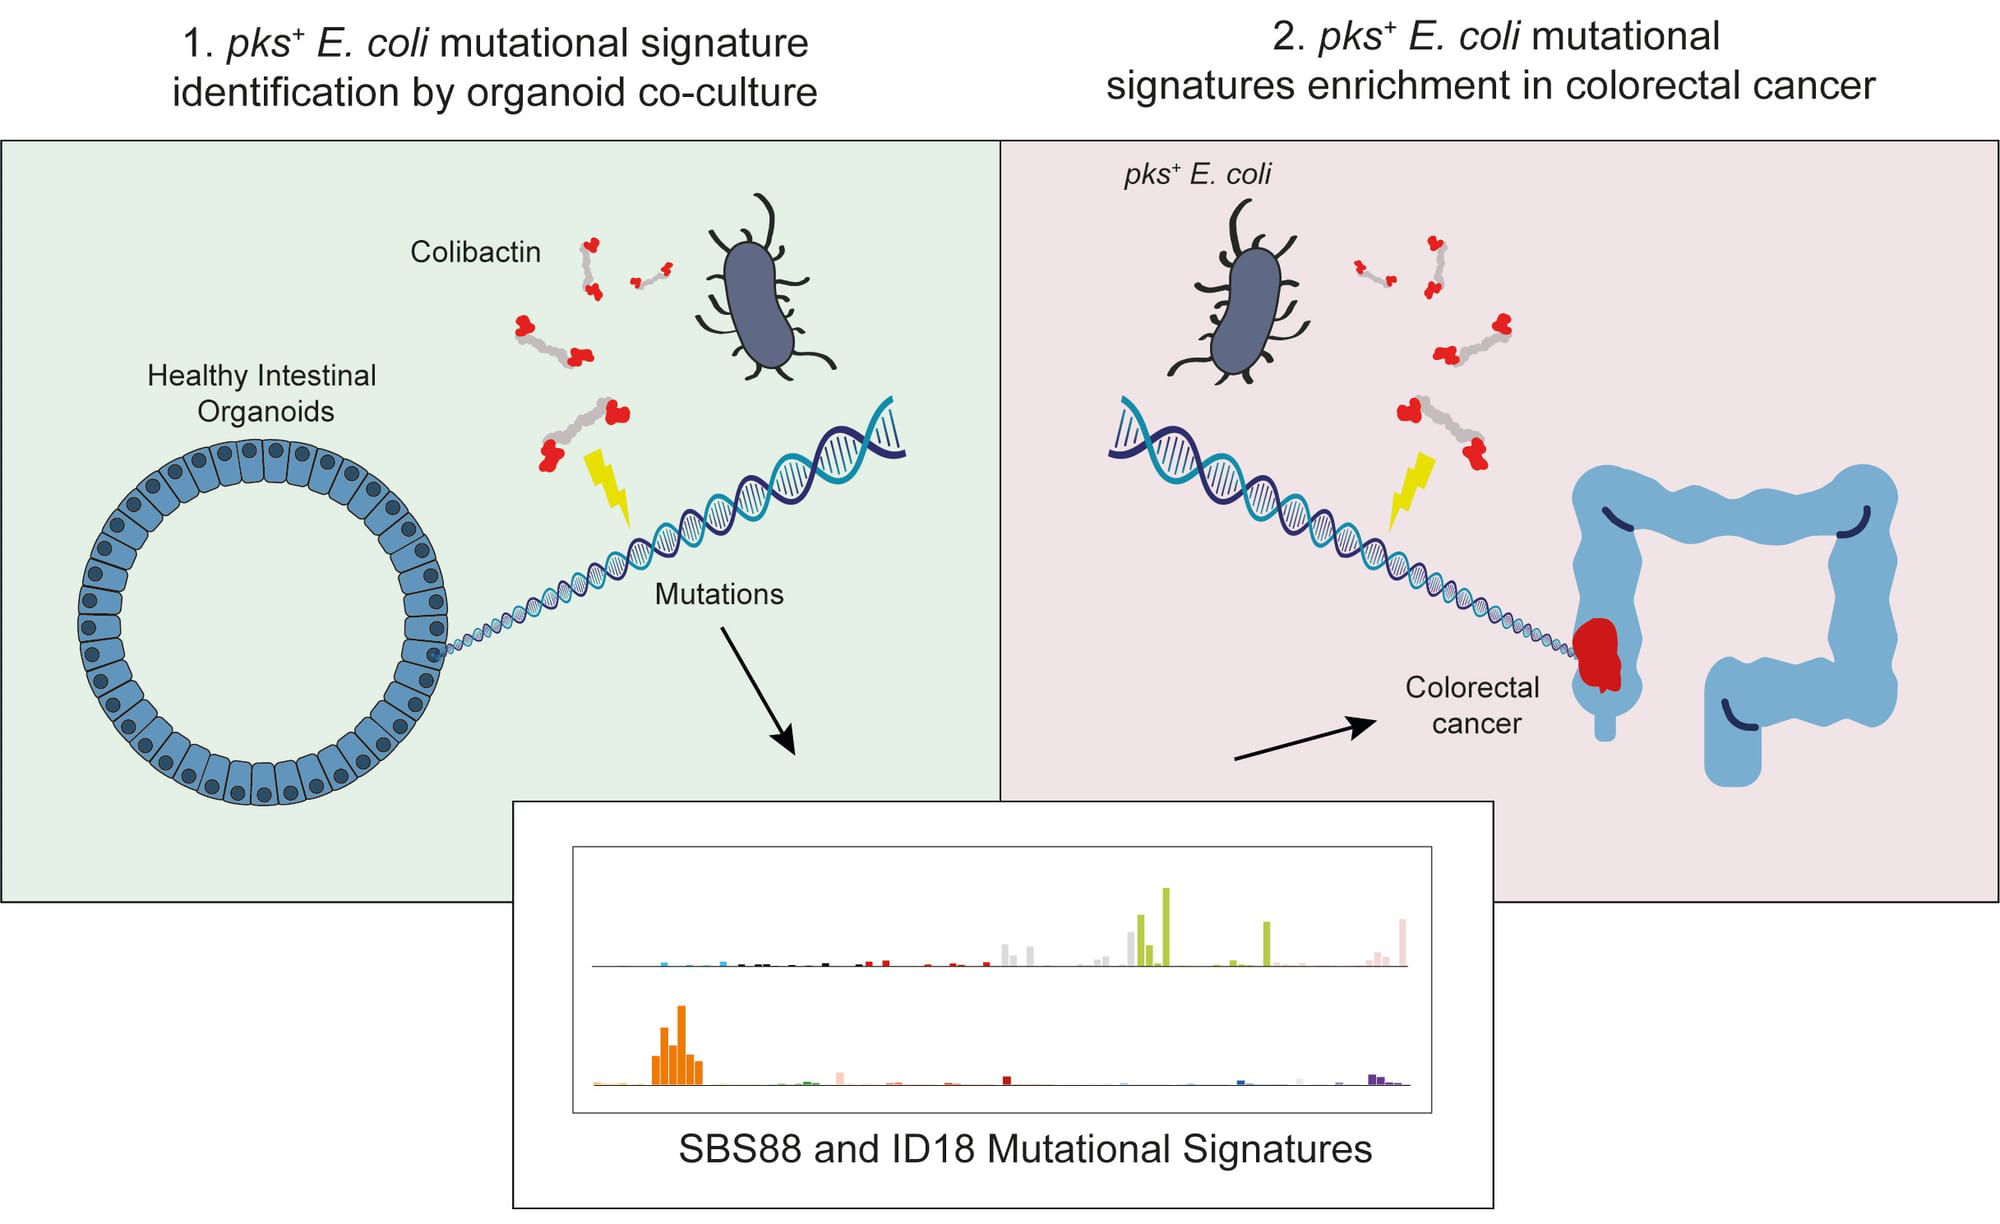 Mutational signature in colorectal cancer caused by genotoxic pks + E. coli